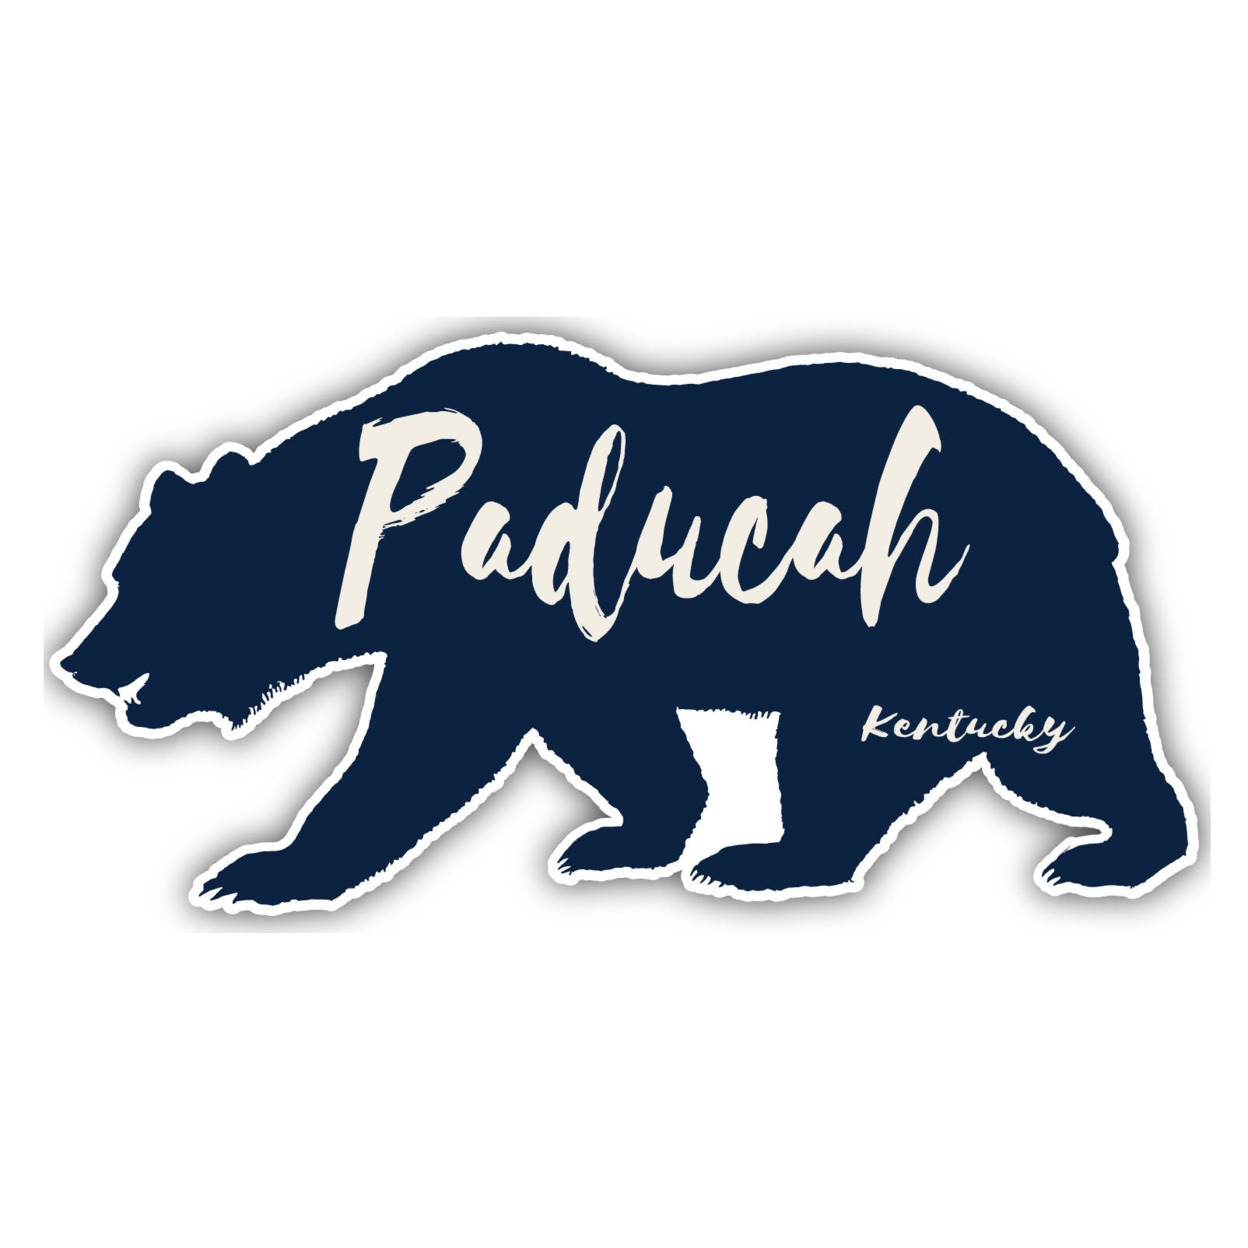 Paducah Kentucky Souvenir Decorative Stickers (Choose Theme And Size) - Single Unit, 2-Inch, Tent